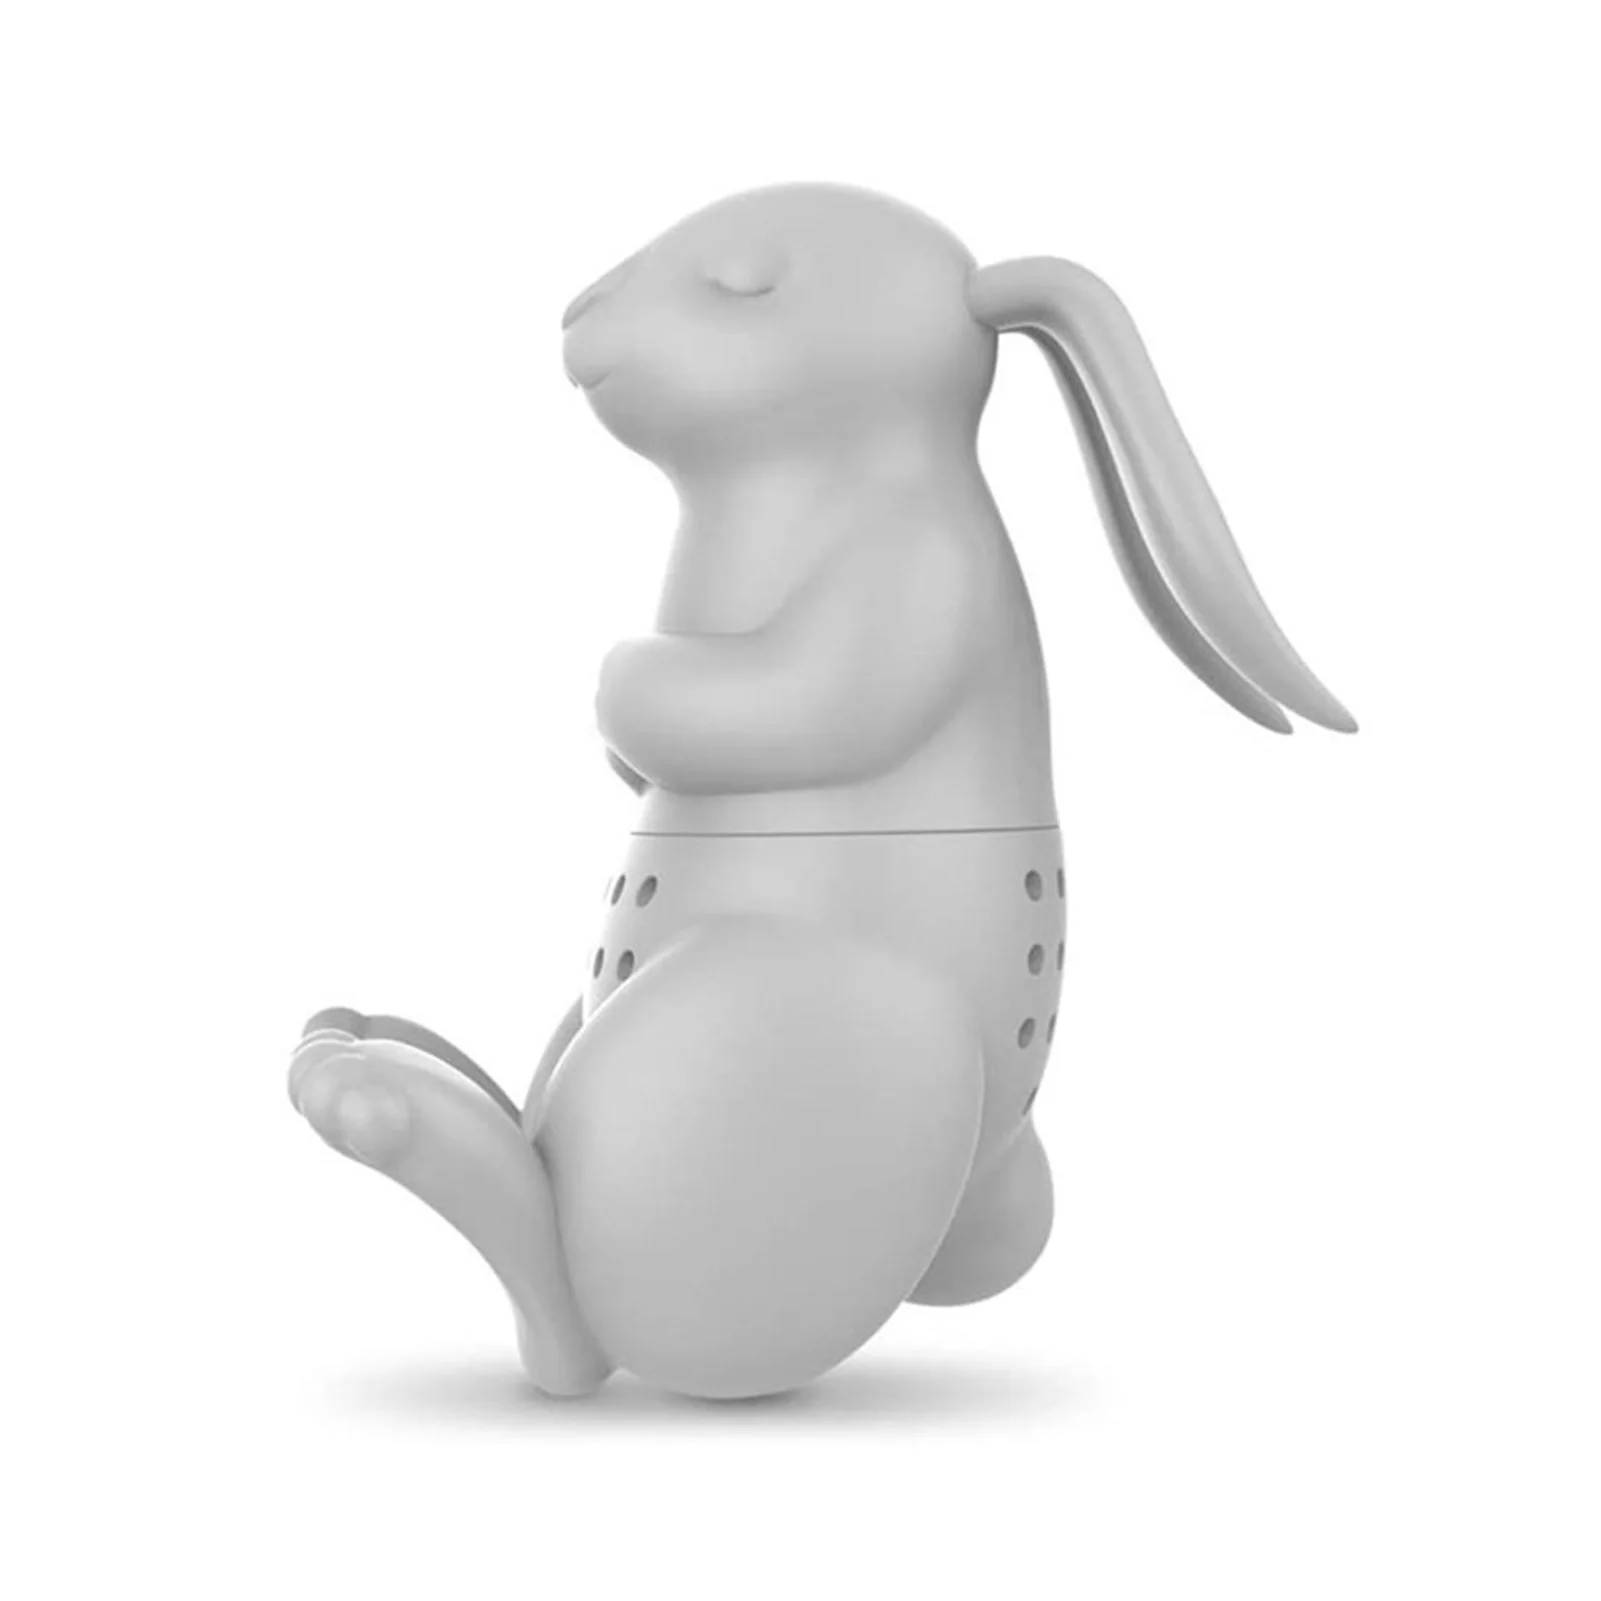 Silicone Tea Strainer Interesting Life Partner Cute Rabbit Teapot Filter Strainer Silicone Tea Maker Bunny Tea Infuser Feasible